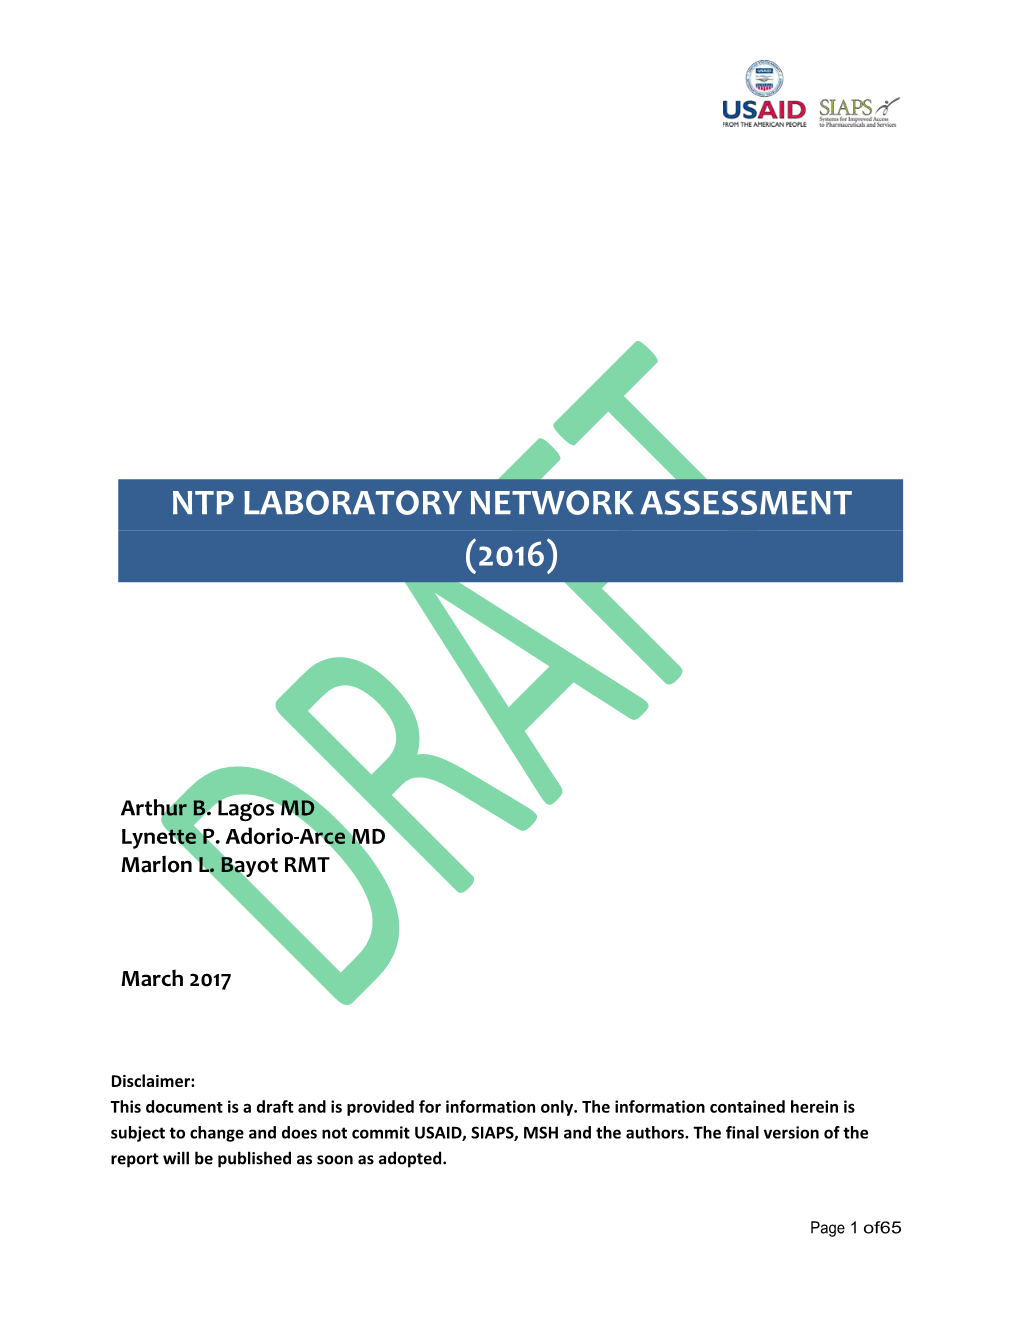 NTP Laboratory Network Assessment (Draft)